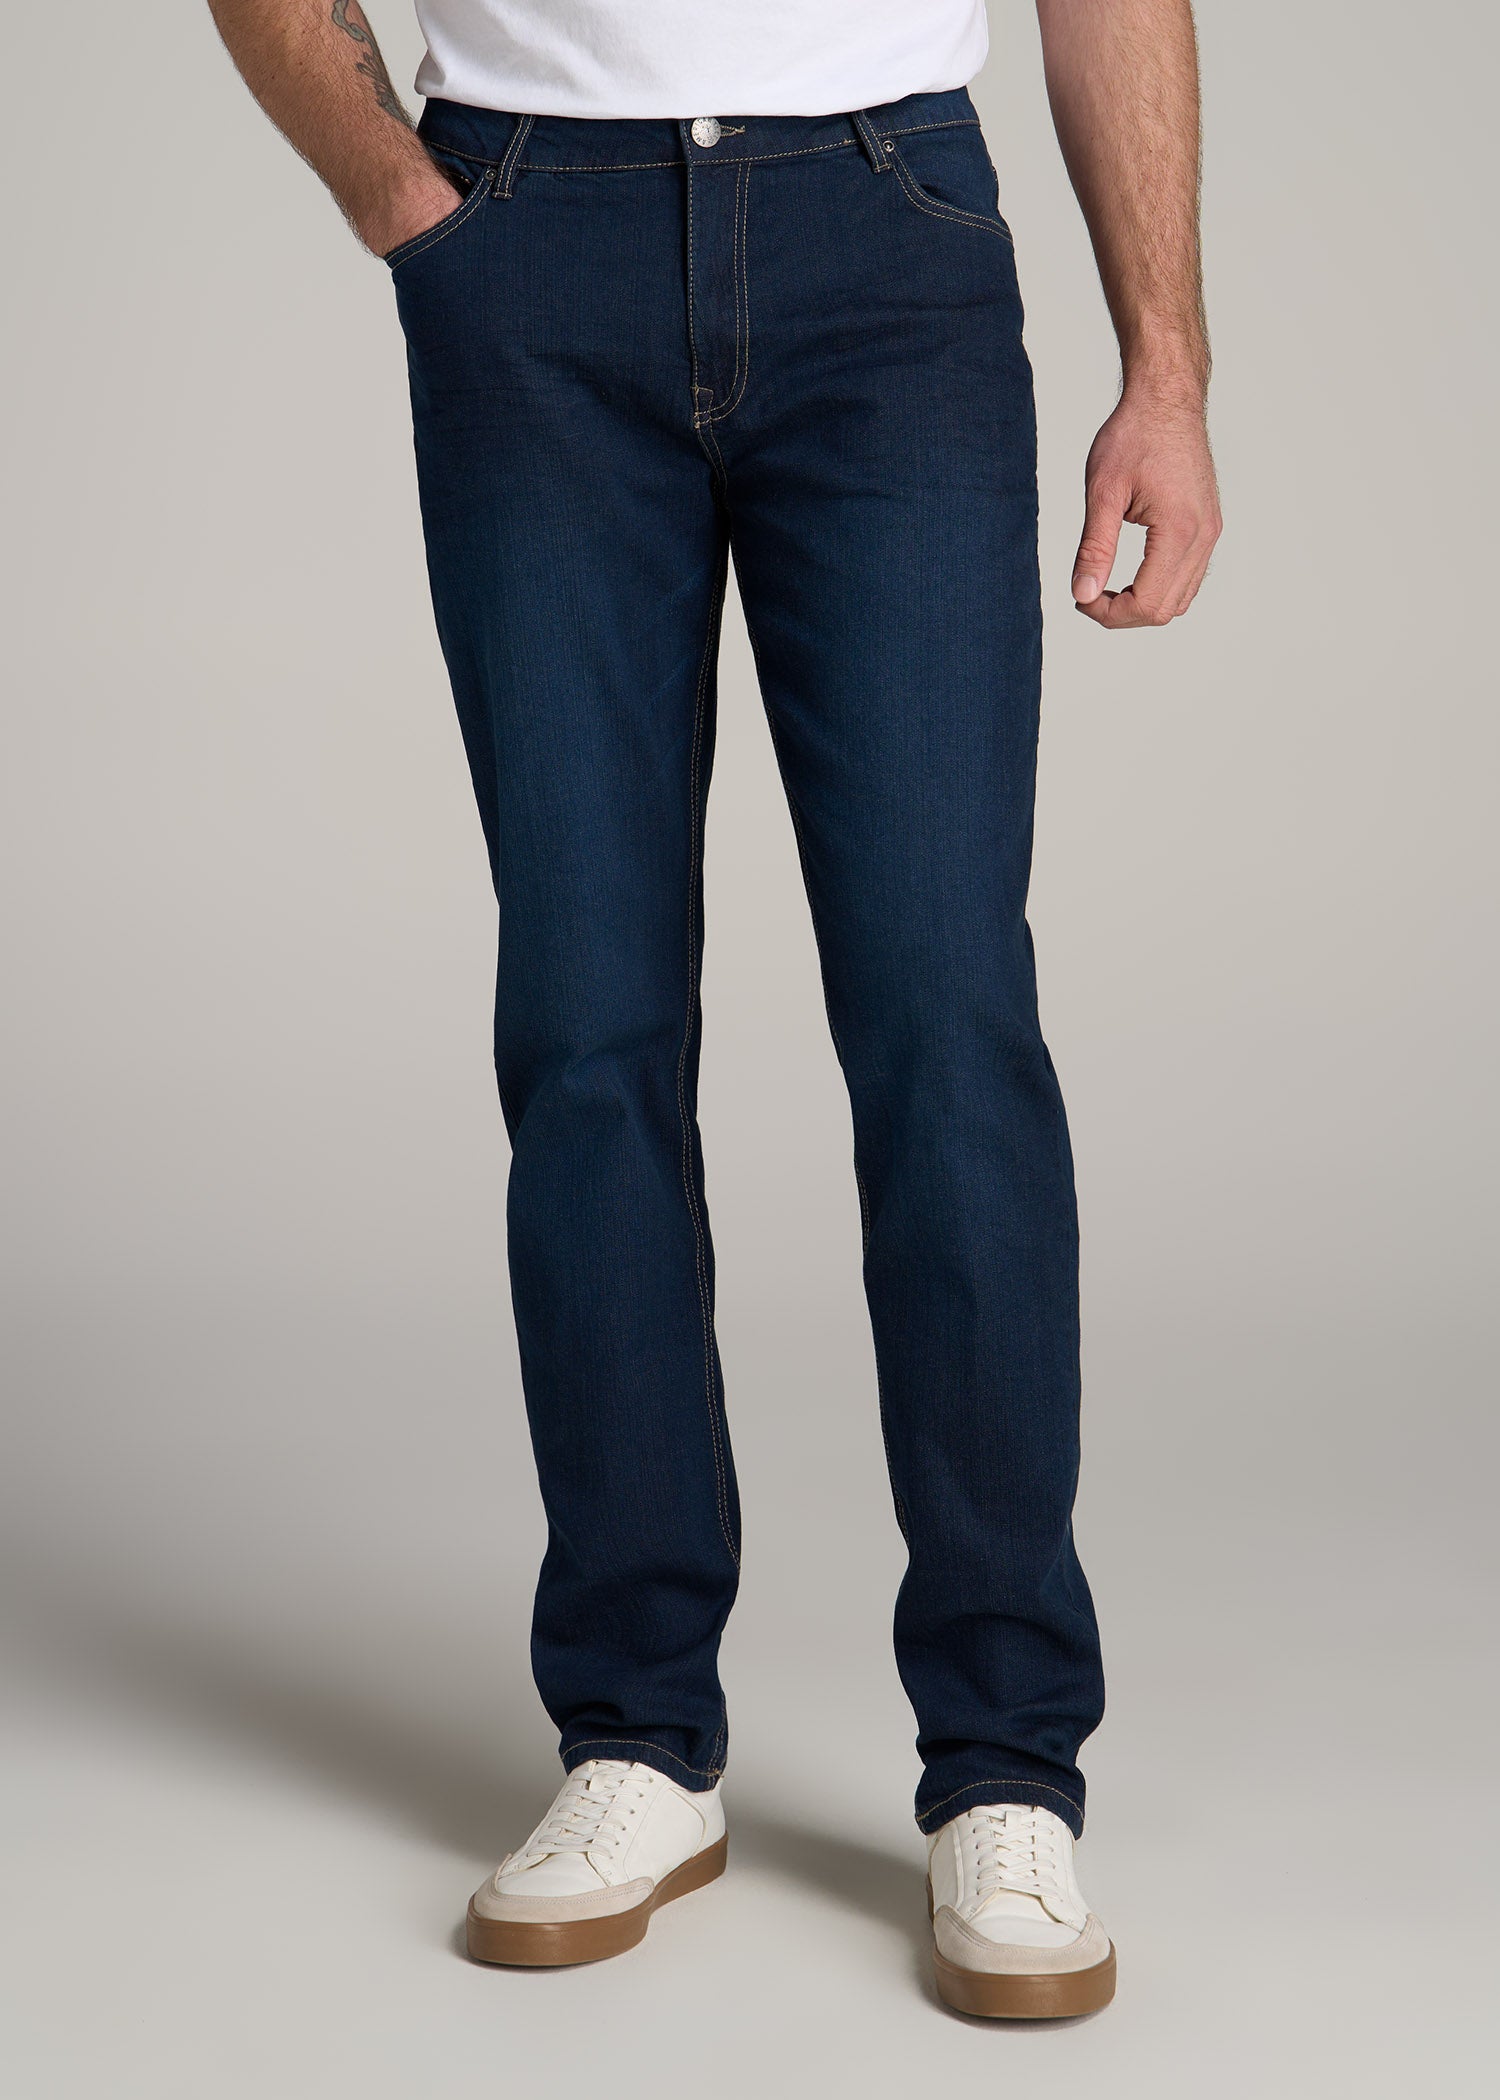 Semi-Relaxed Men\'s Jeans Blue Steel | American Tall